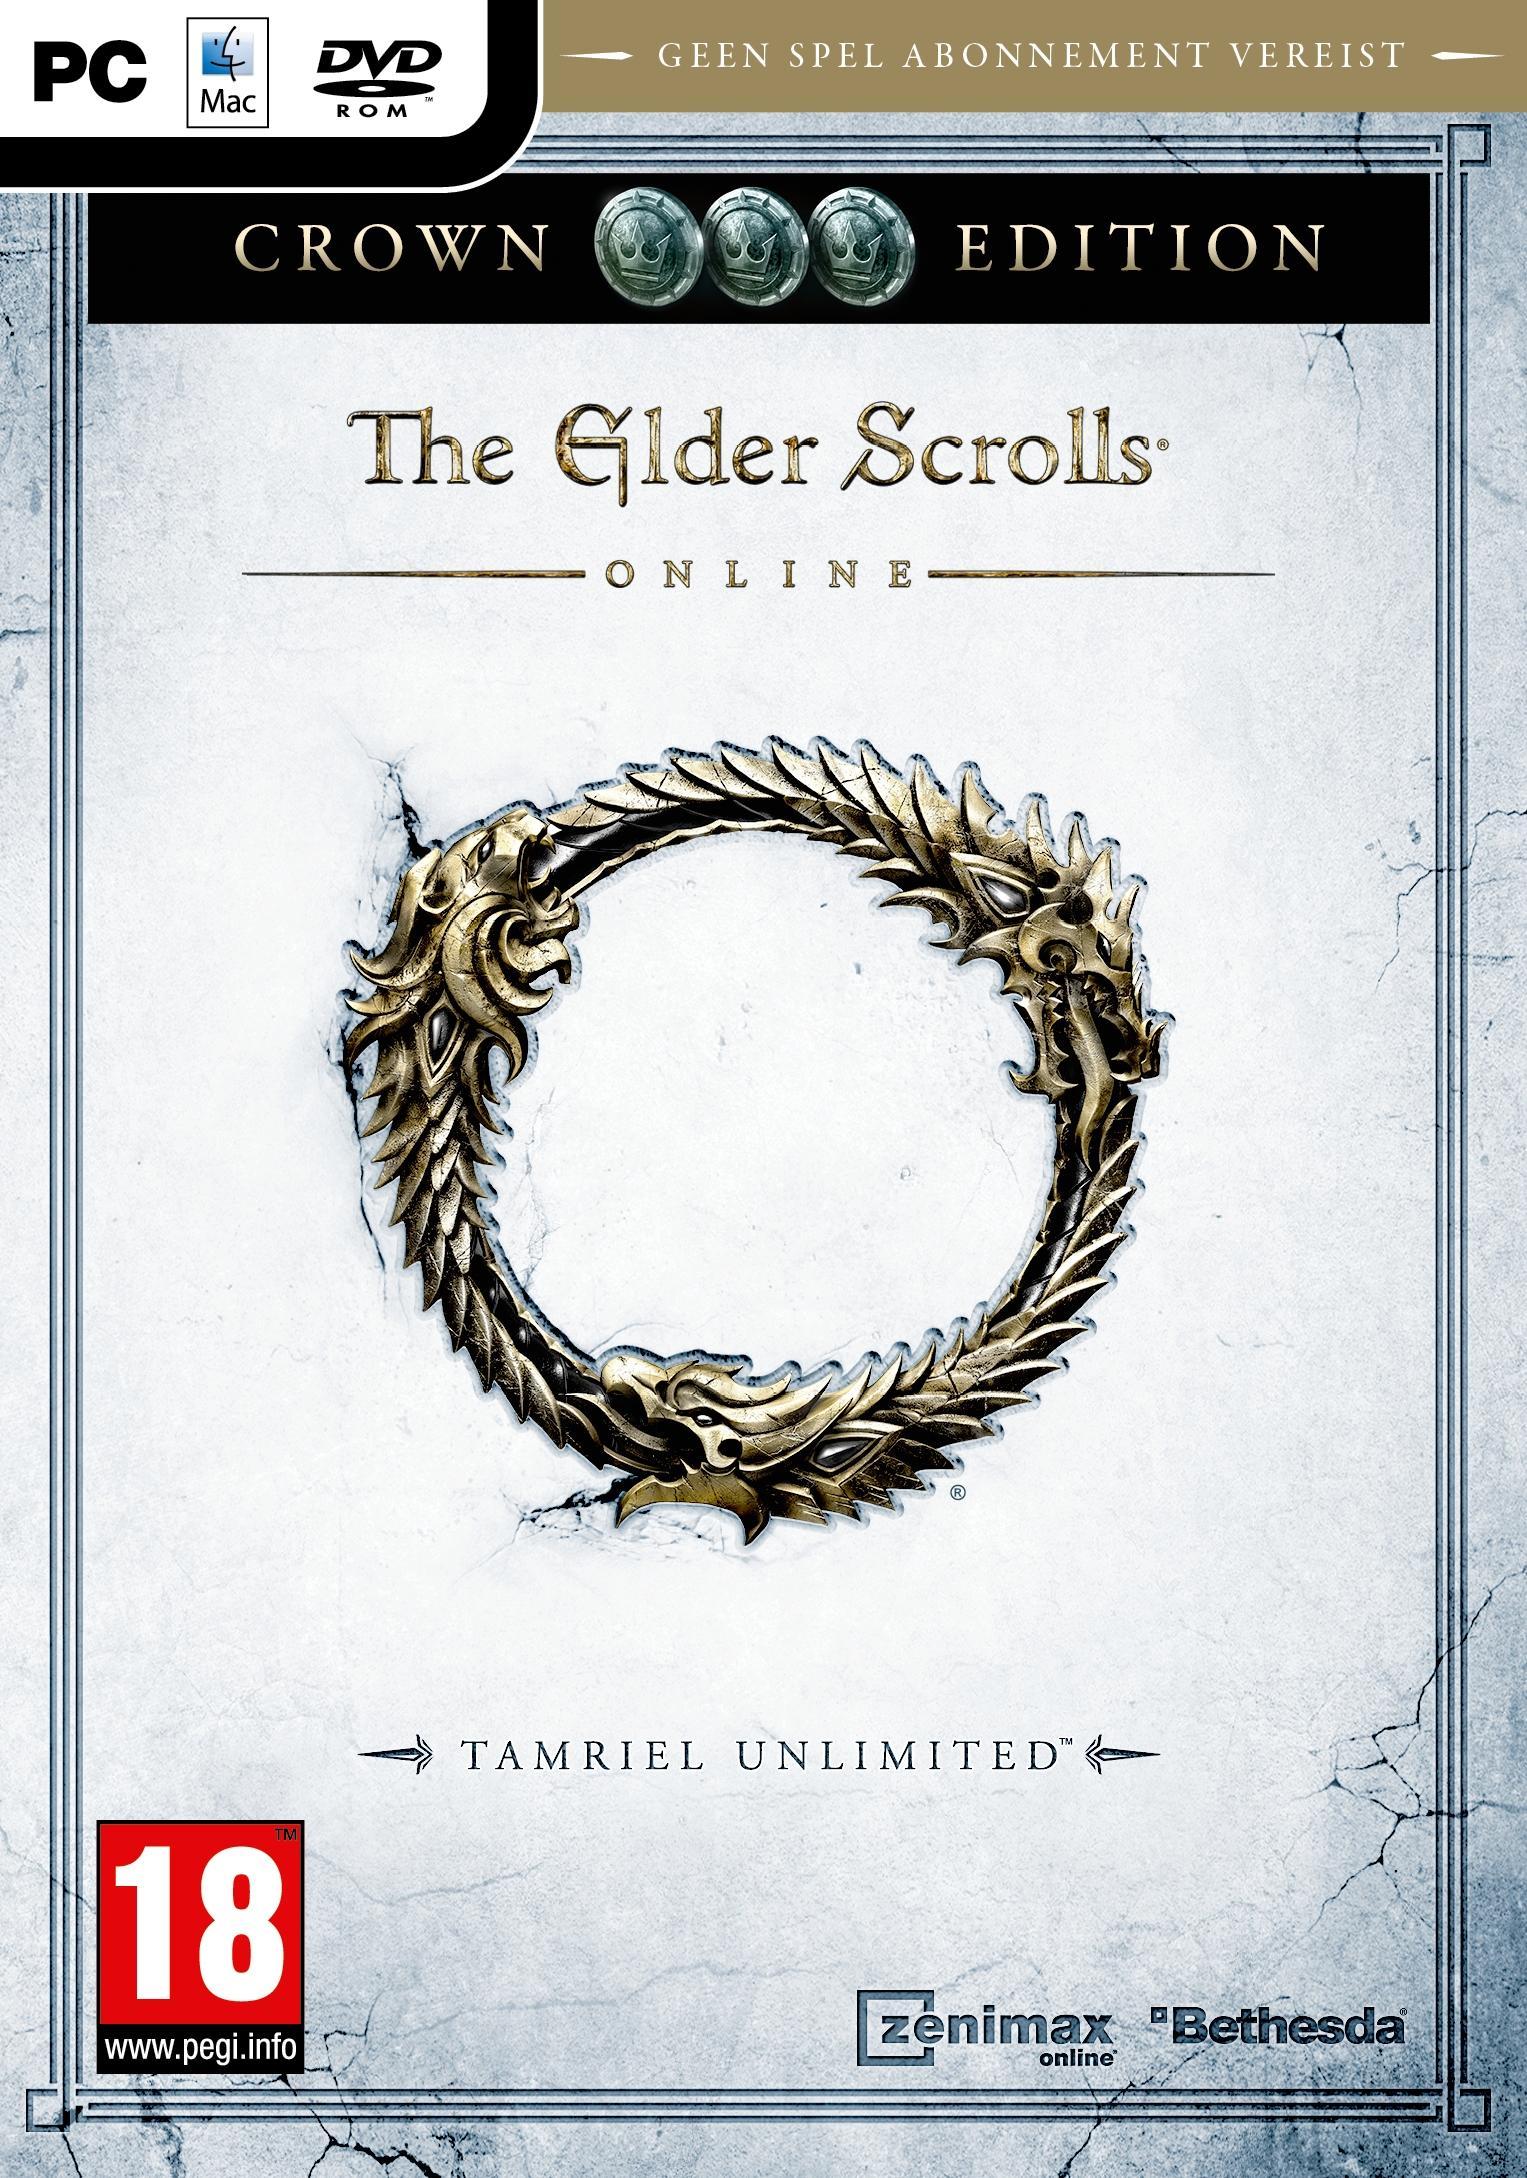 The Elder Scrolls Online: Tamriel Unlimited - Crown Day One Edition (PC), Bethesda